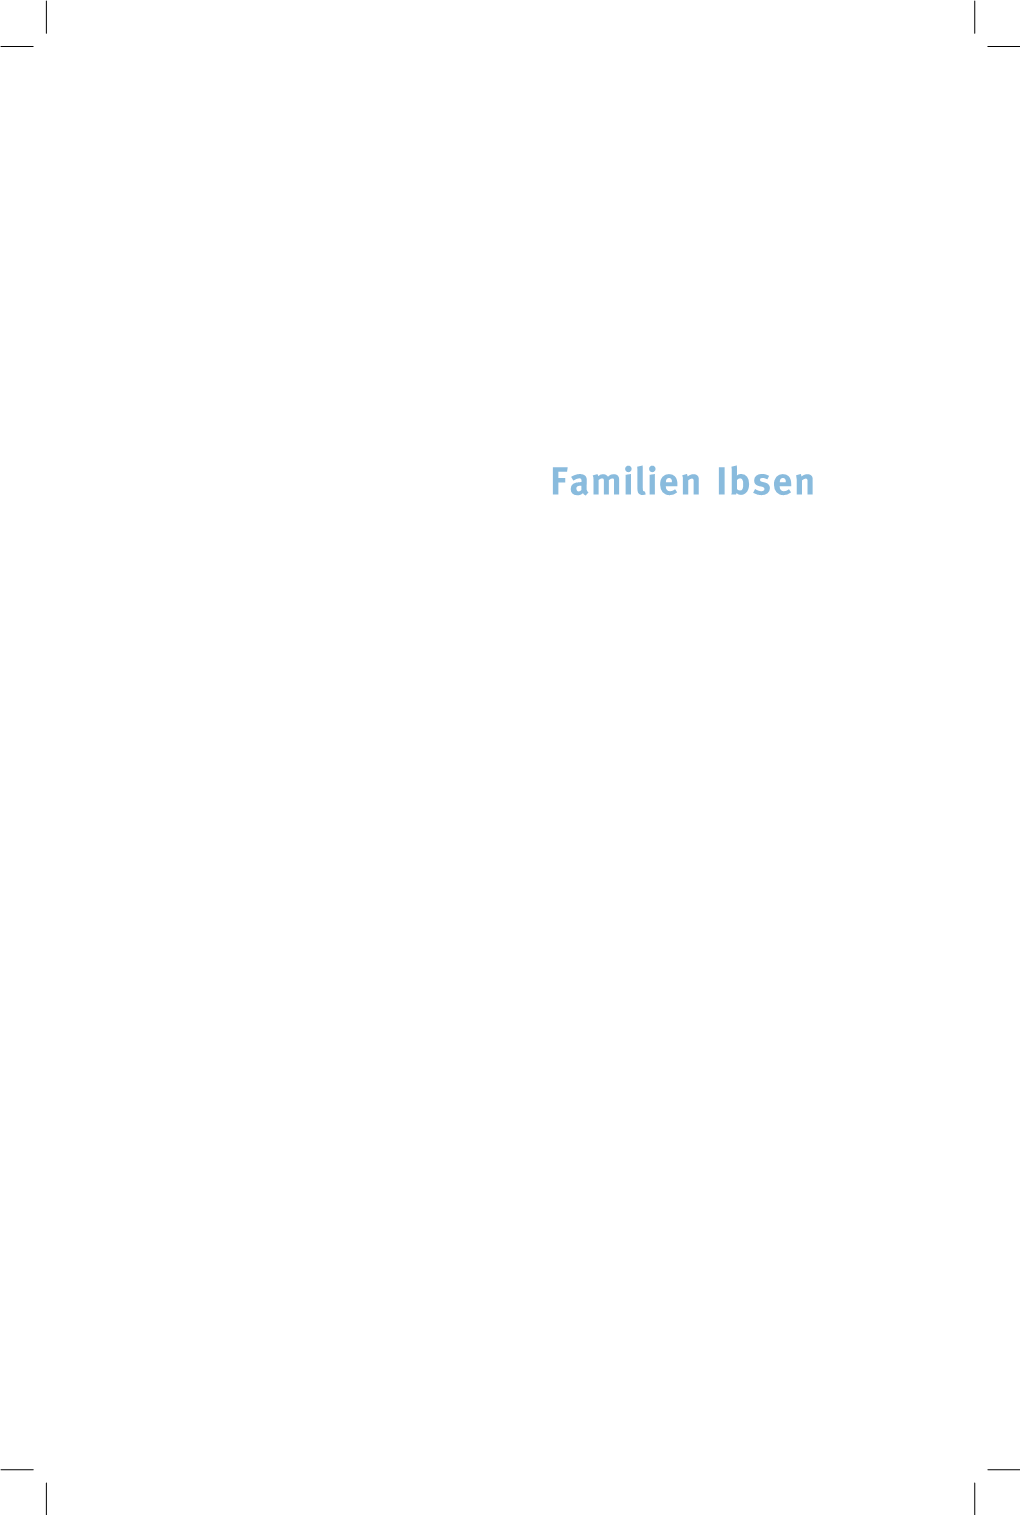 40075 Familien Ibsen.Indd